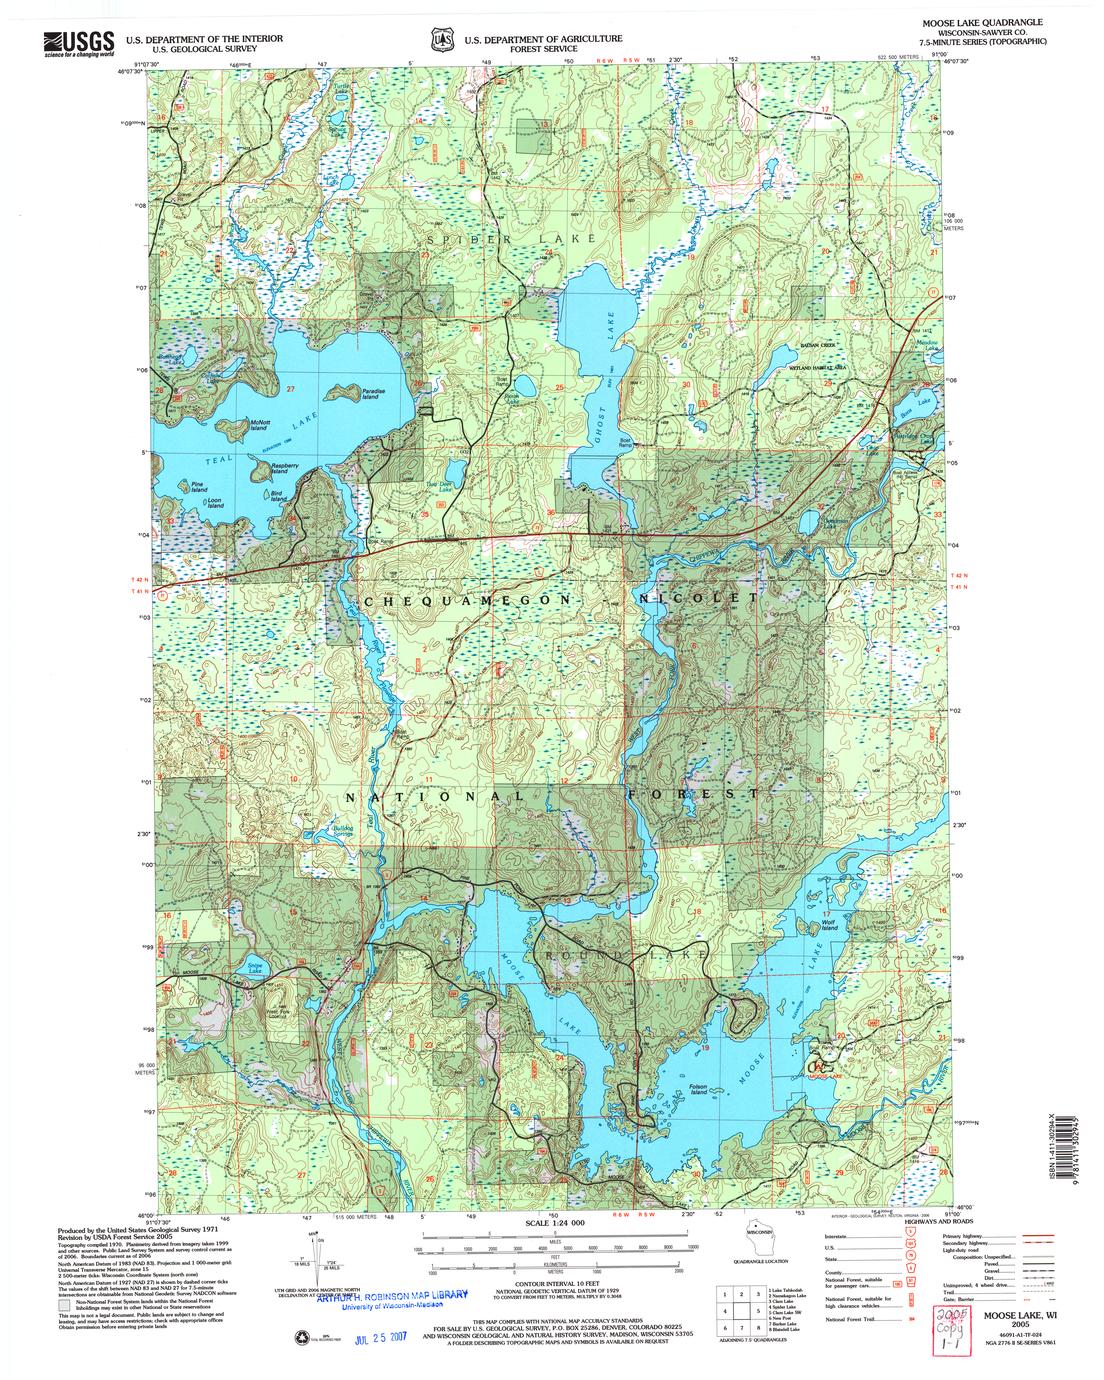 Moose Lake quadrangle